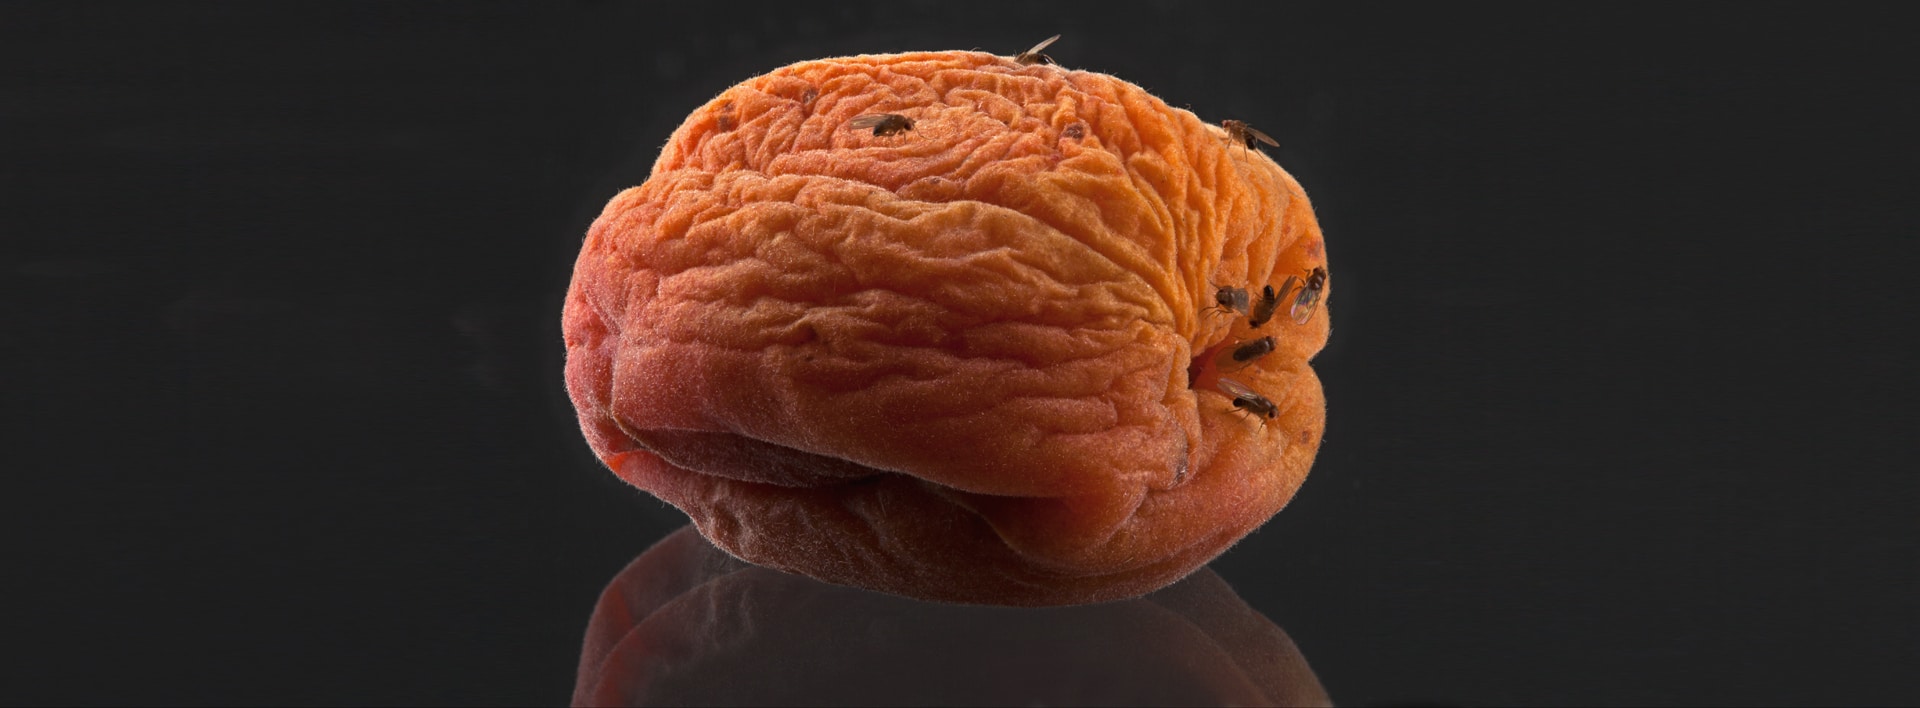 Fruit flies on a rotting wrinkled peach